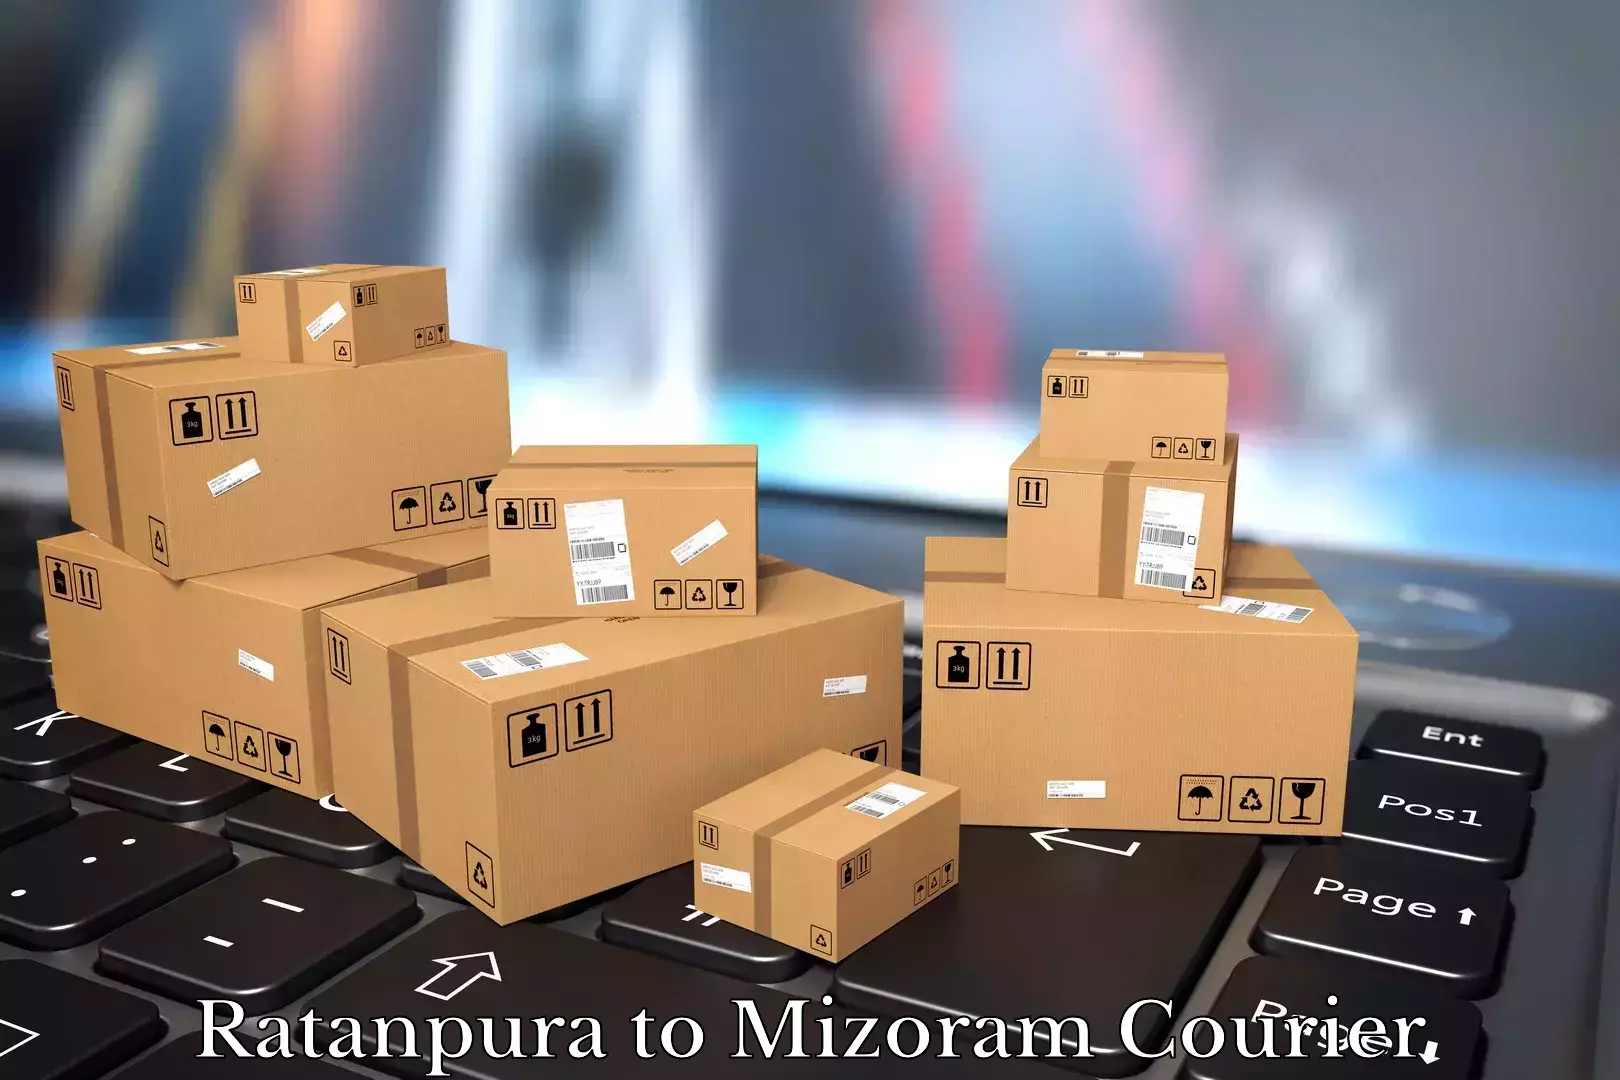 Trusted relocation experts Ratanpura to Mizoram